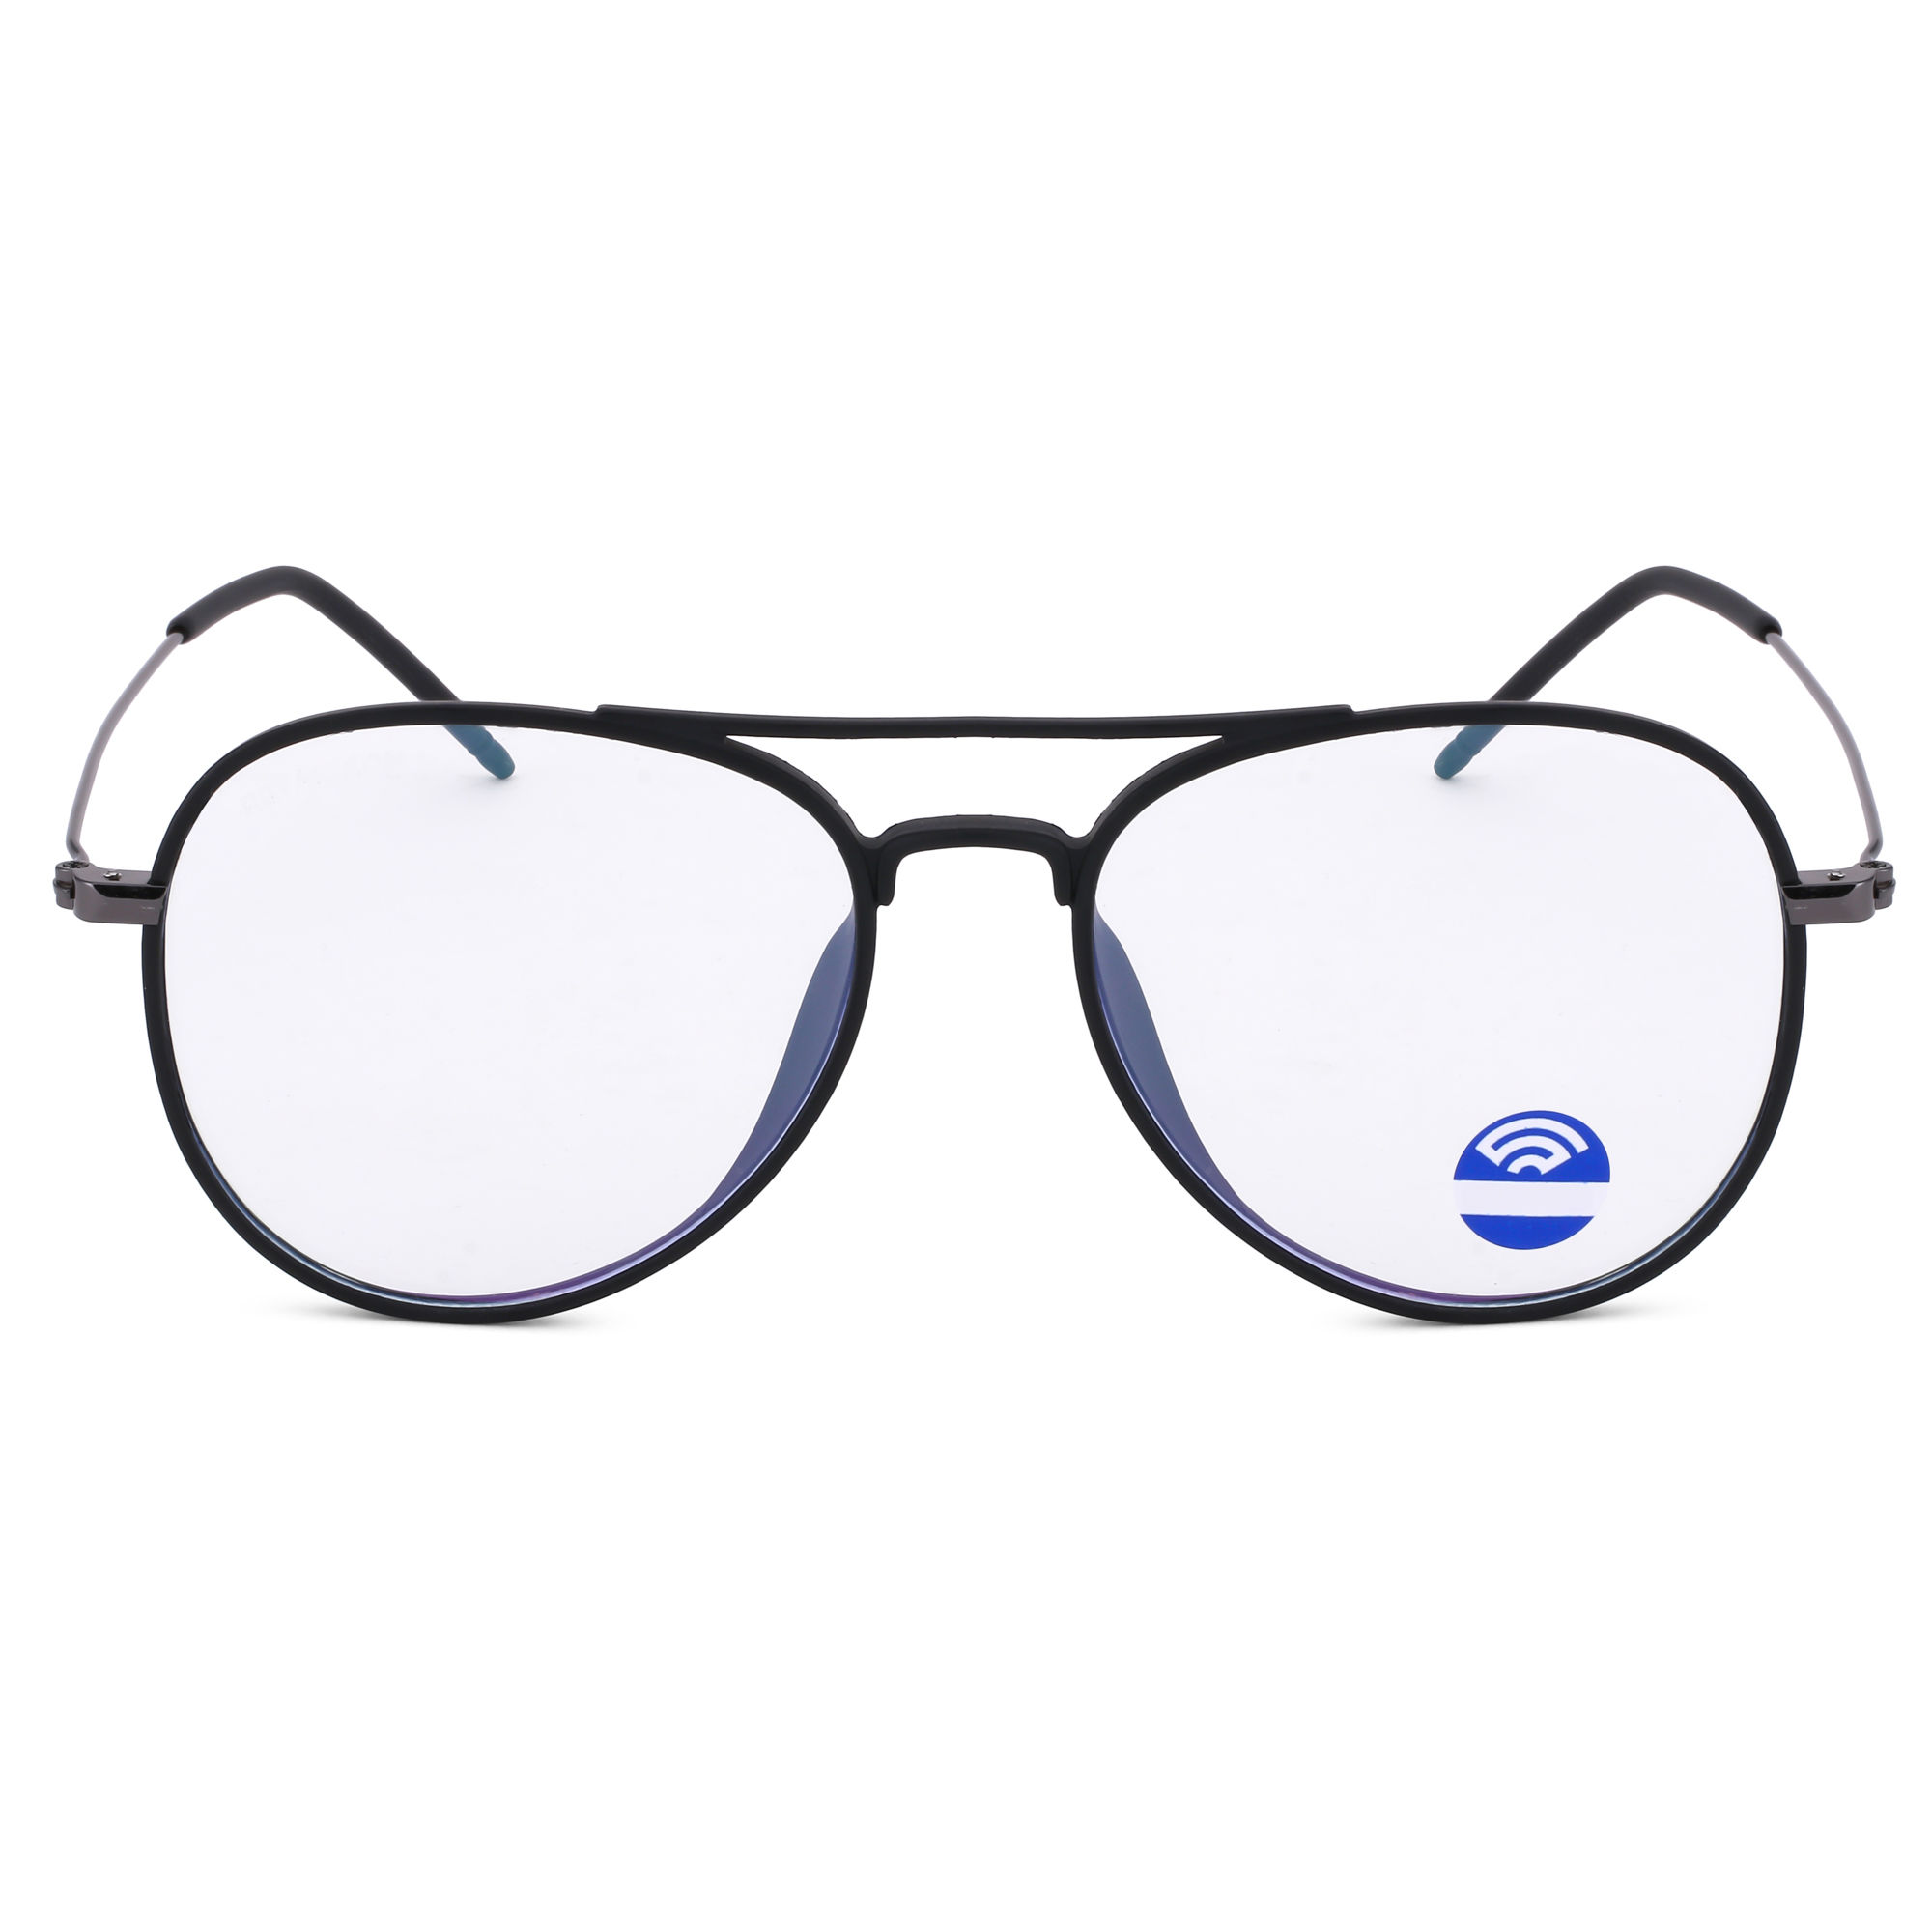 Soigné | Buy Spectacles & Eyewear Online